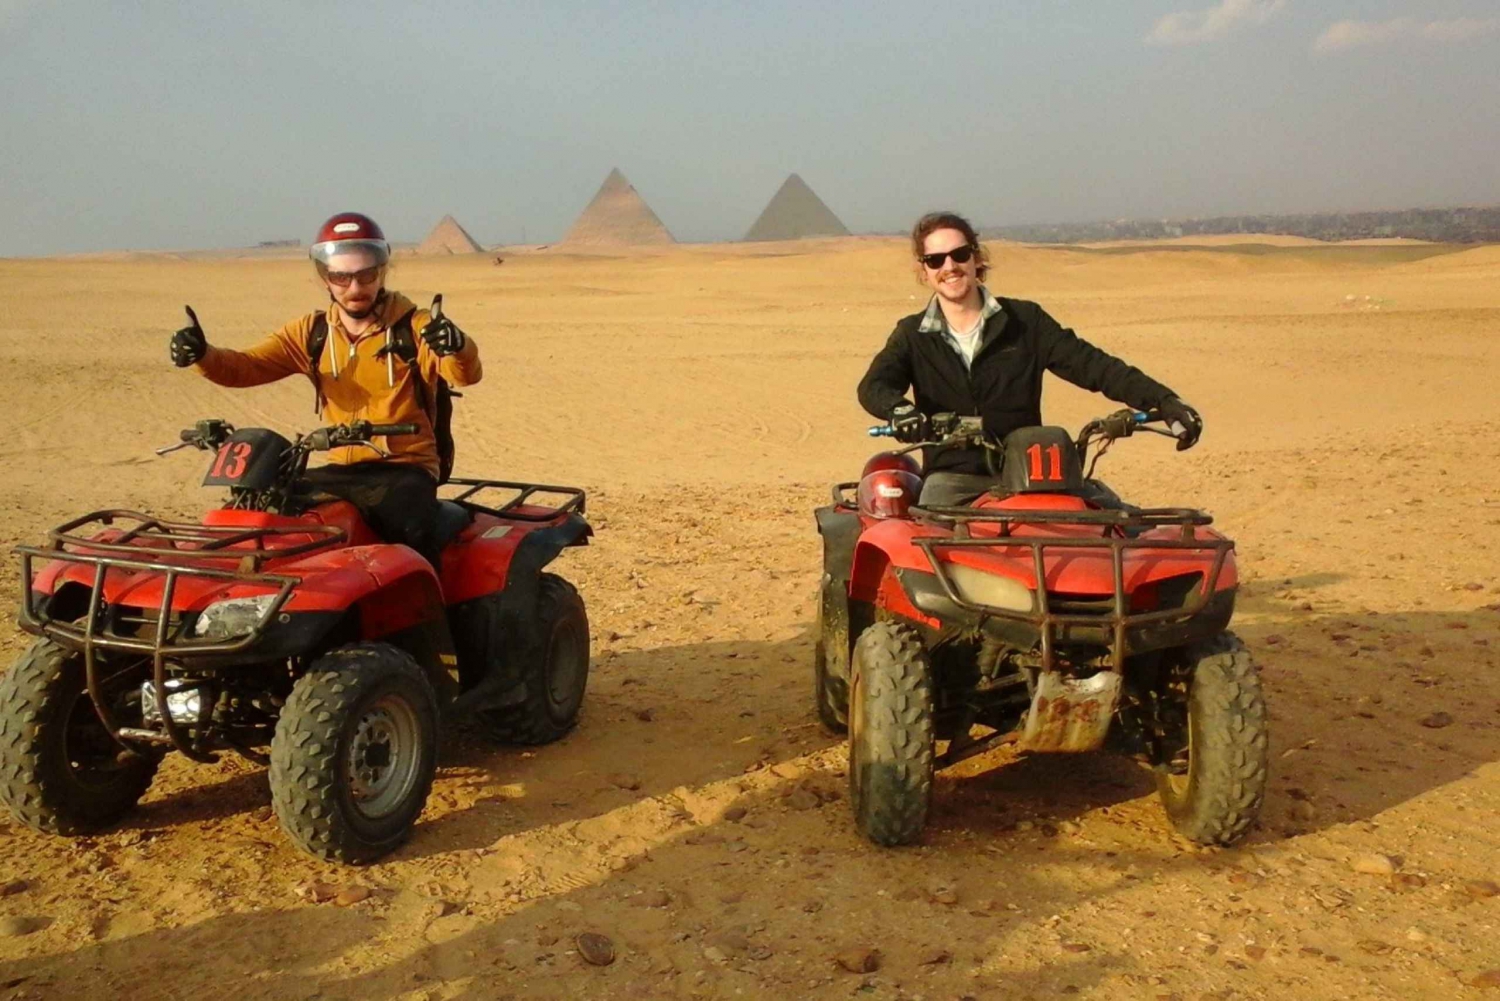 Desert Safari by Quad Bike Around Pyramids